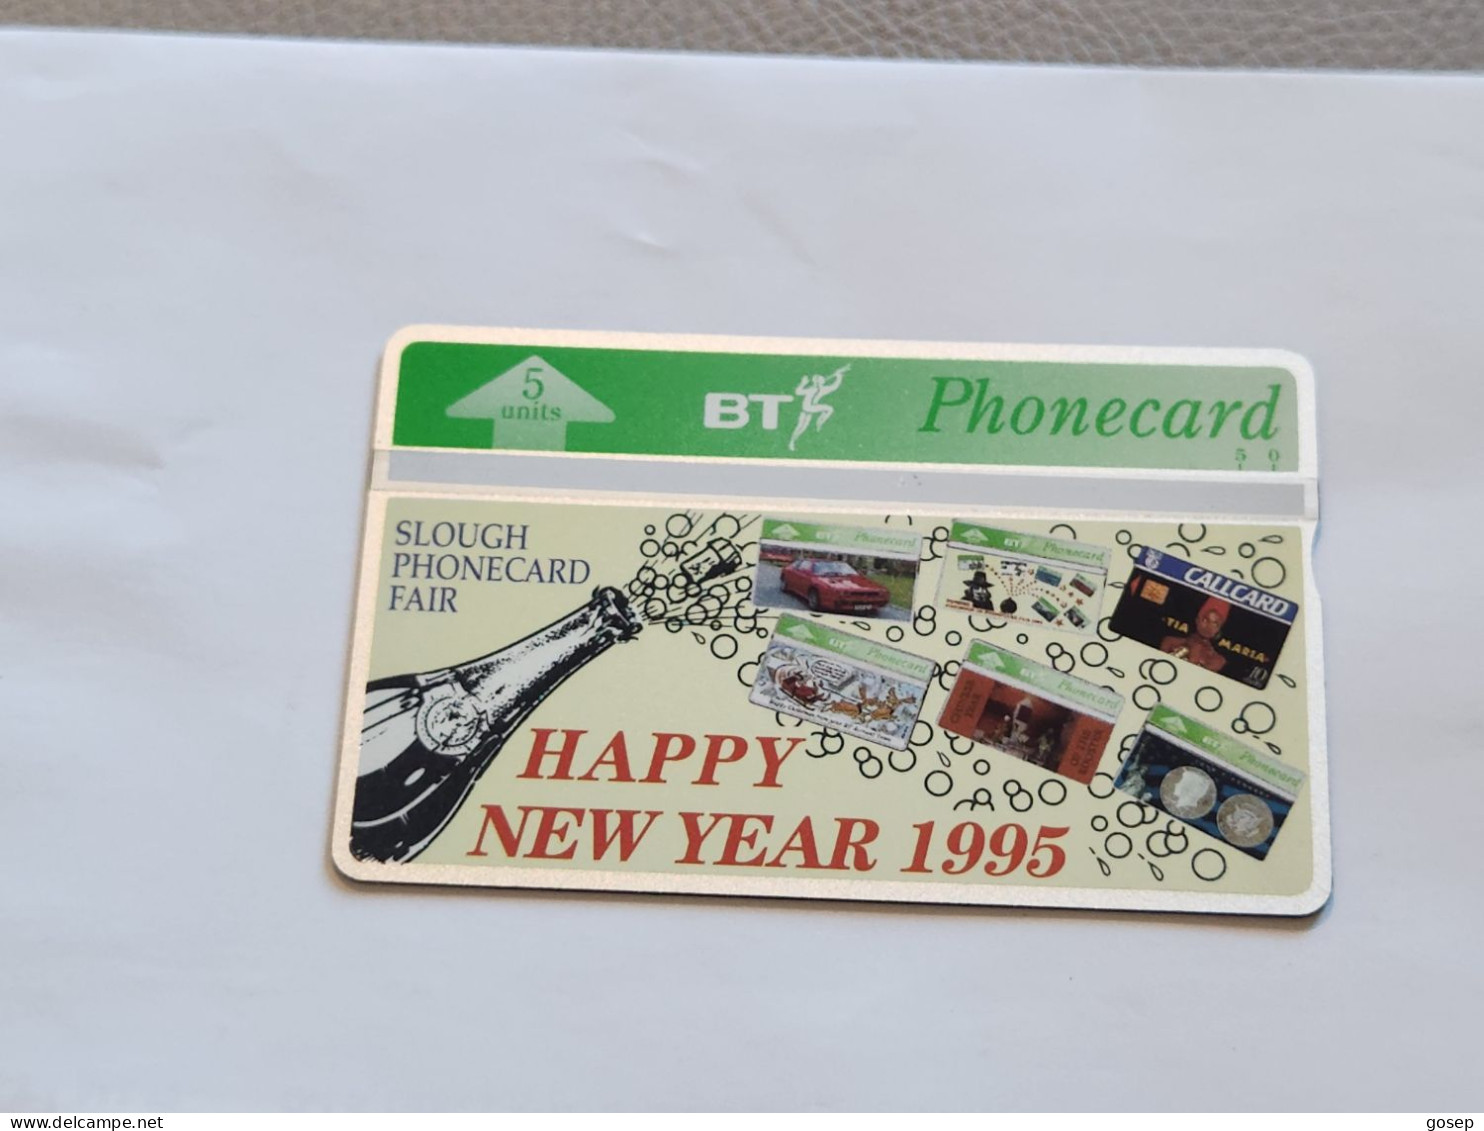 United Kingdom-(BTG-444)-Slough Phonecard Fair-(382)(5units)(405L50999)(tirage-500)-price Cataloge-10.00£-mint - BT Algemene Uitgaven